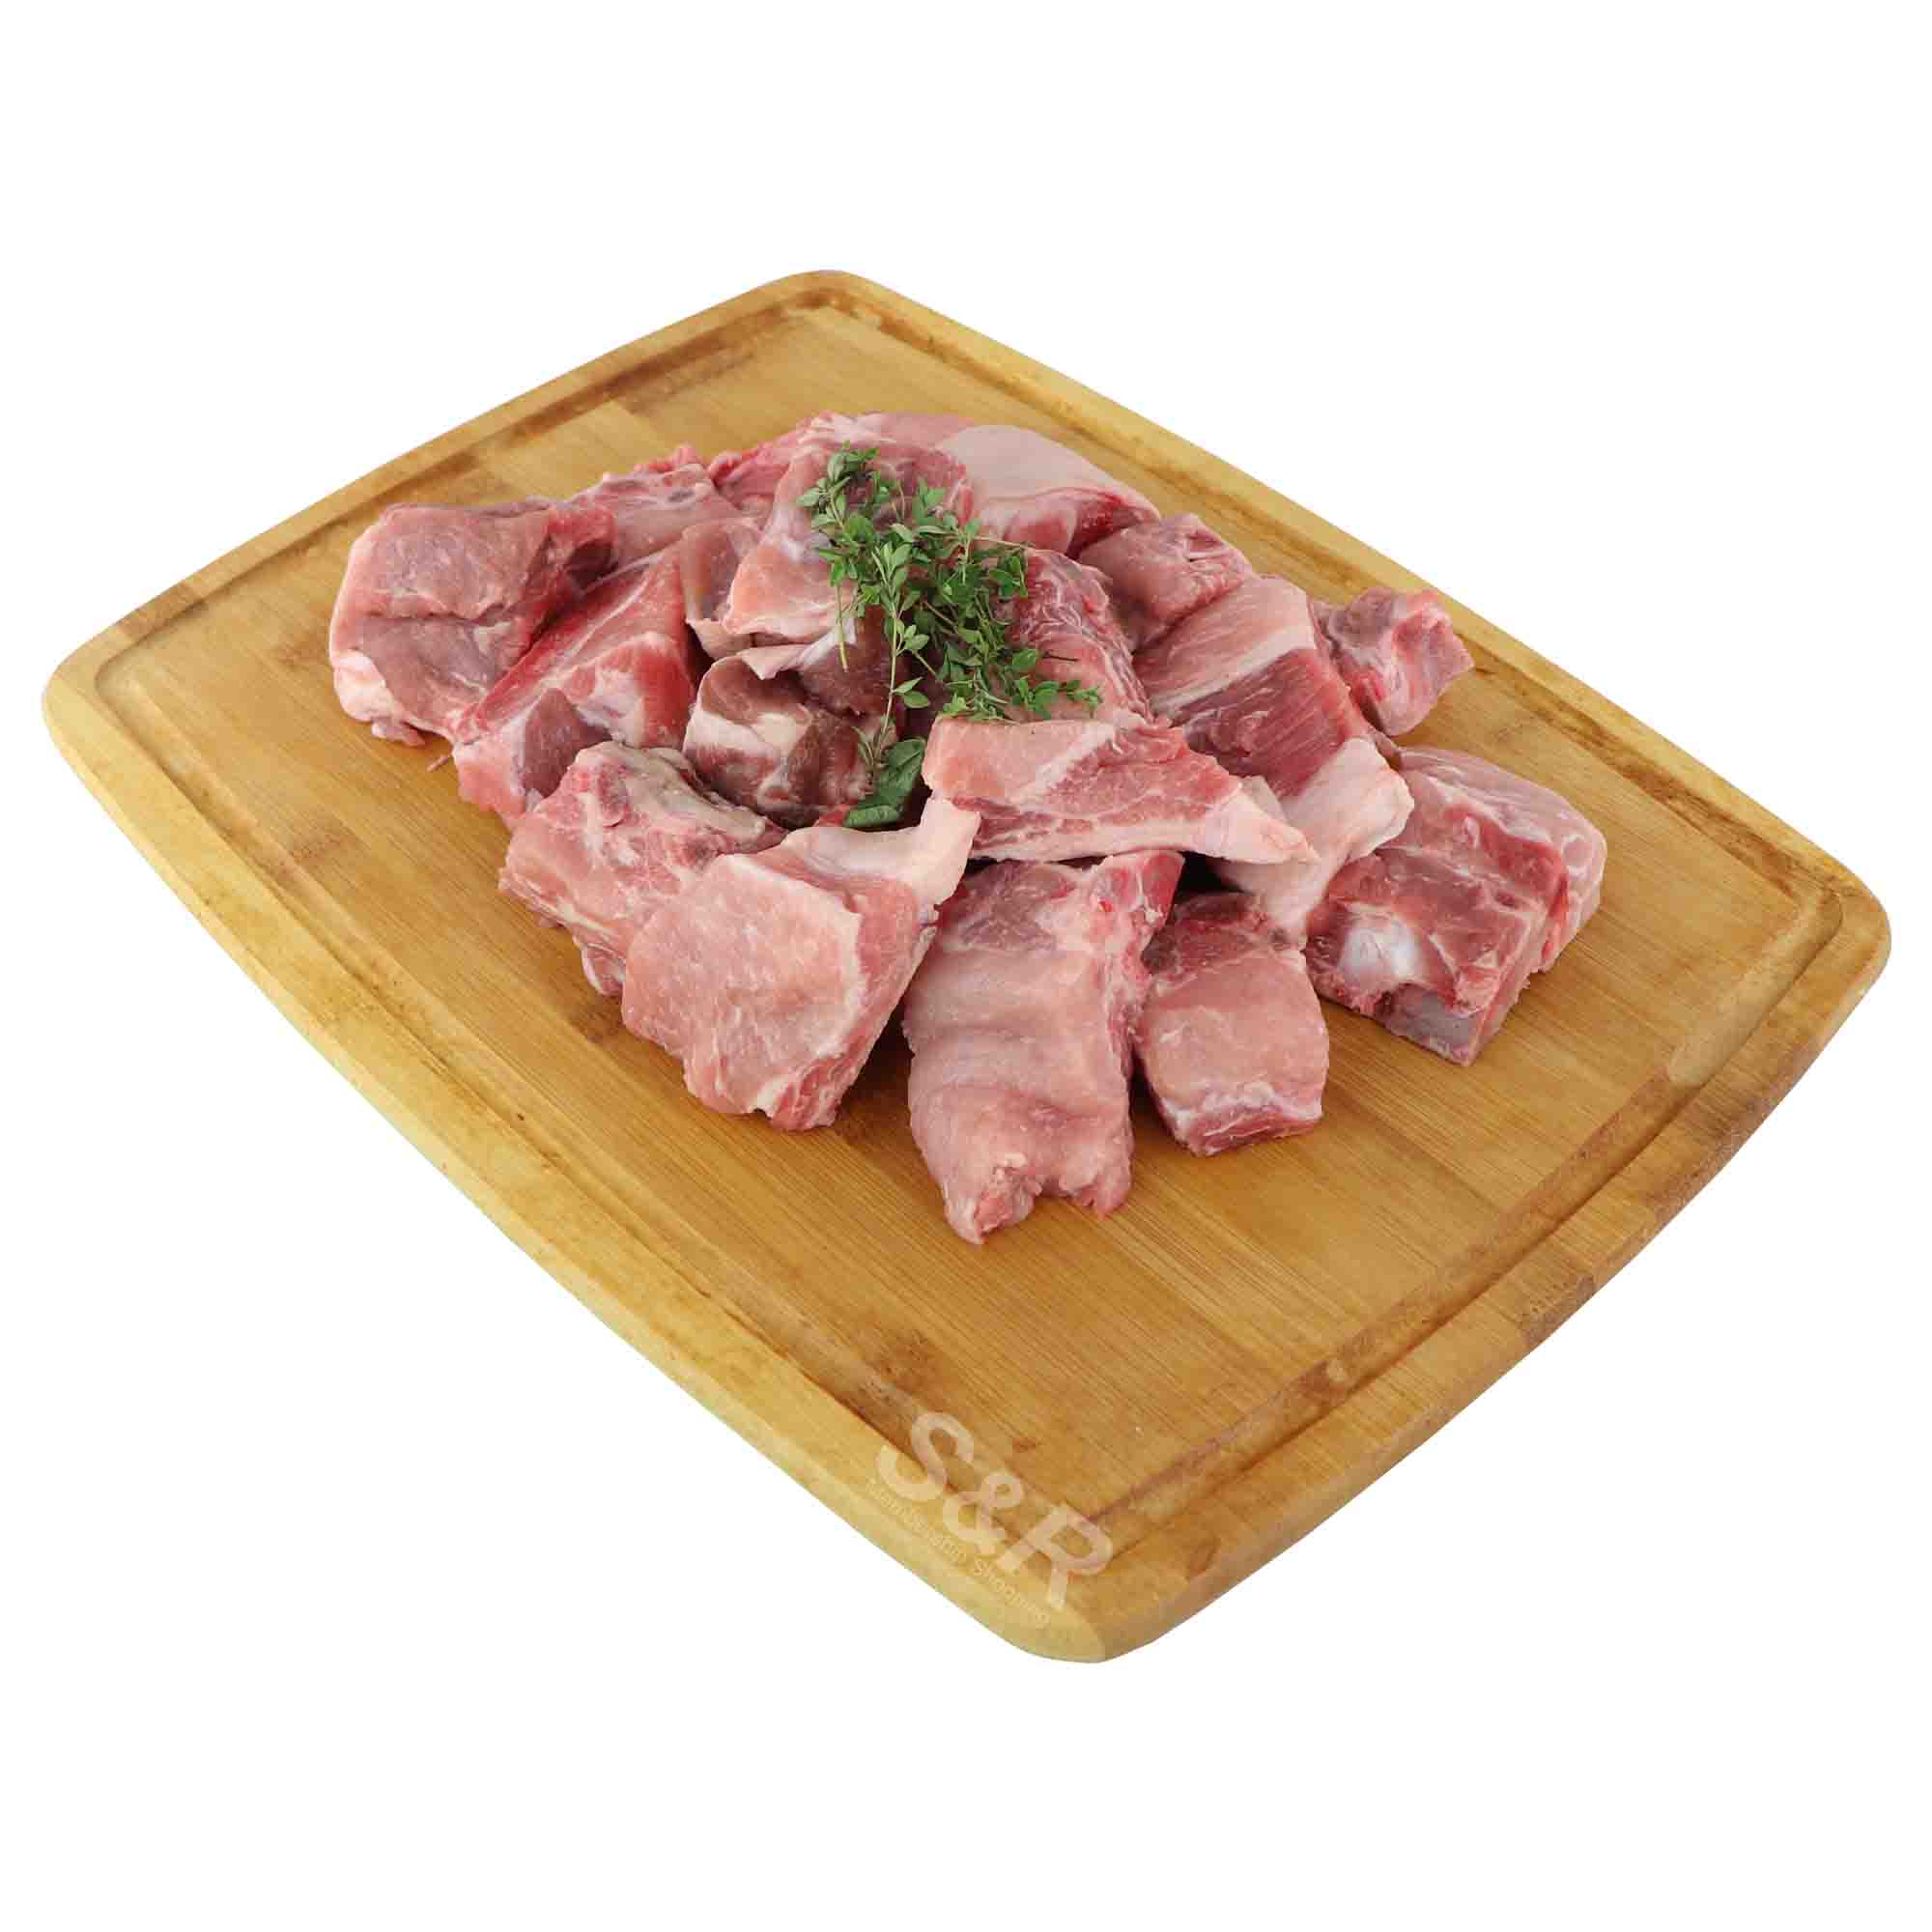 Members' Value Pork Sinigang Cut approx. 1.7kg